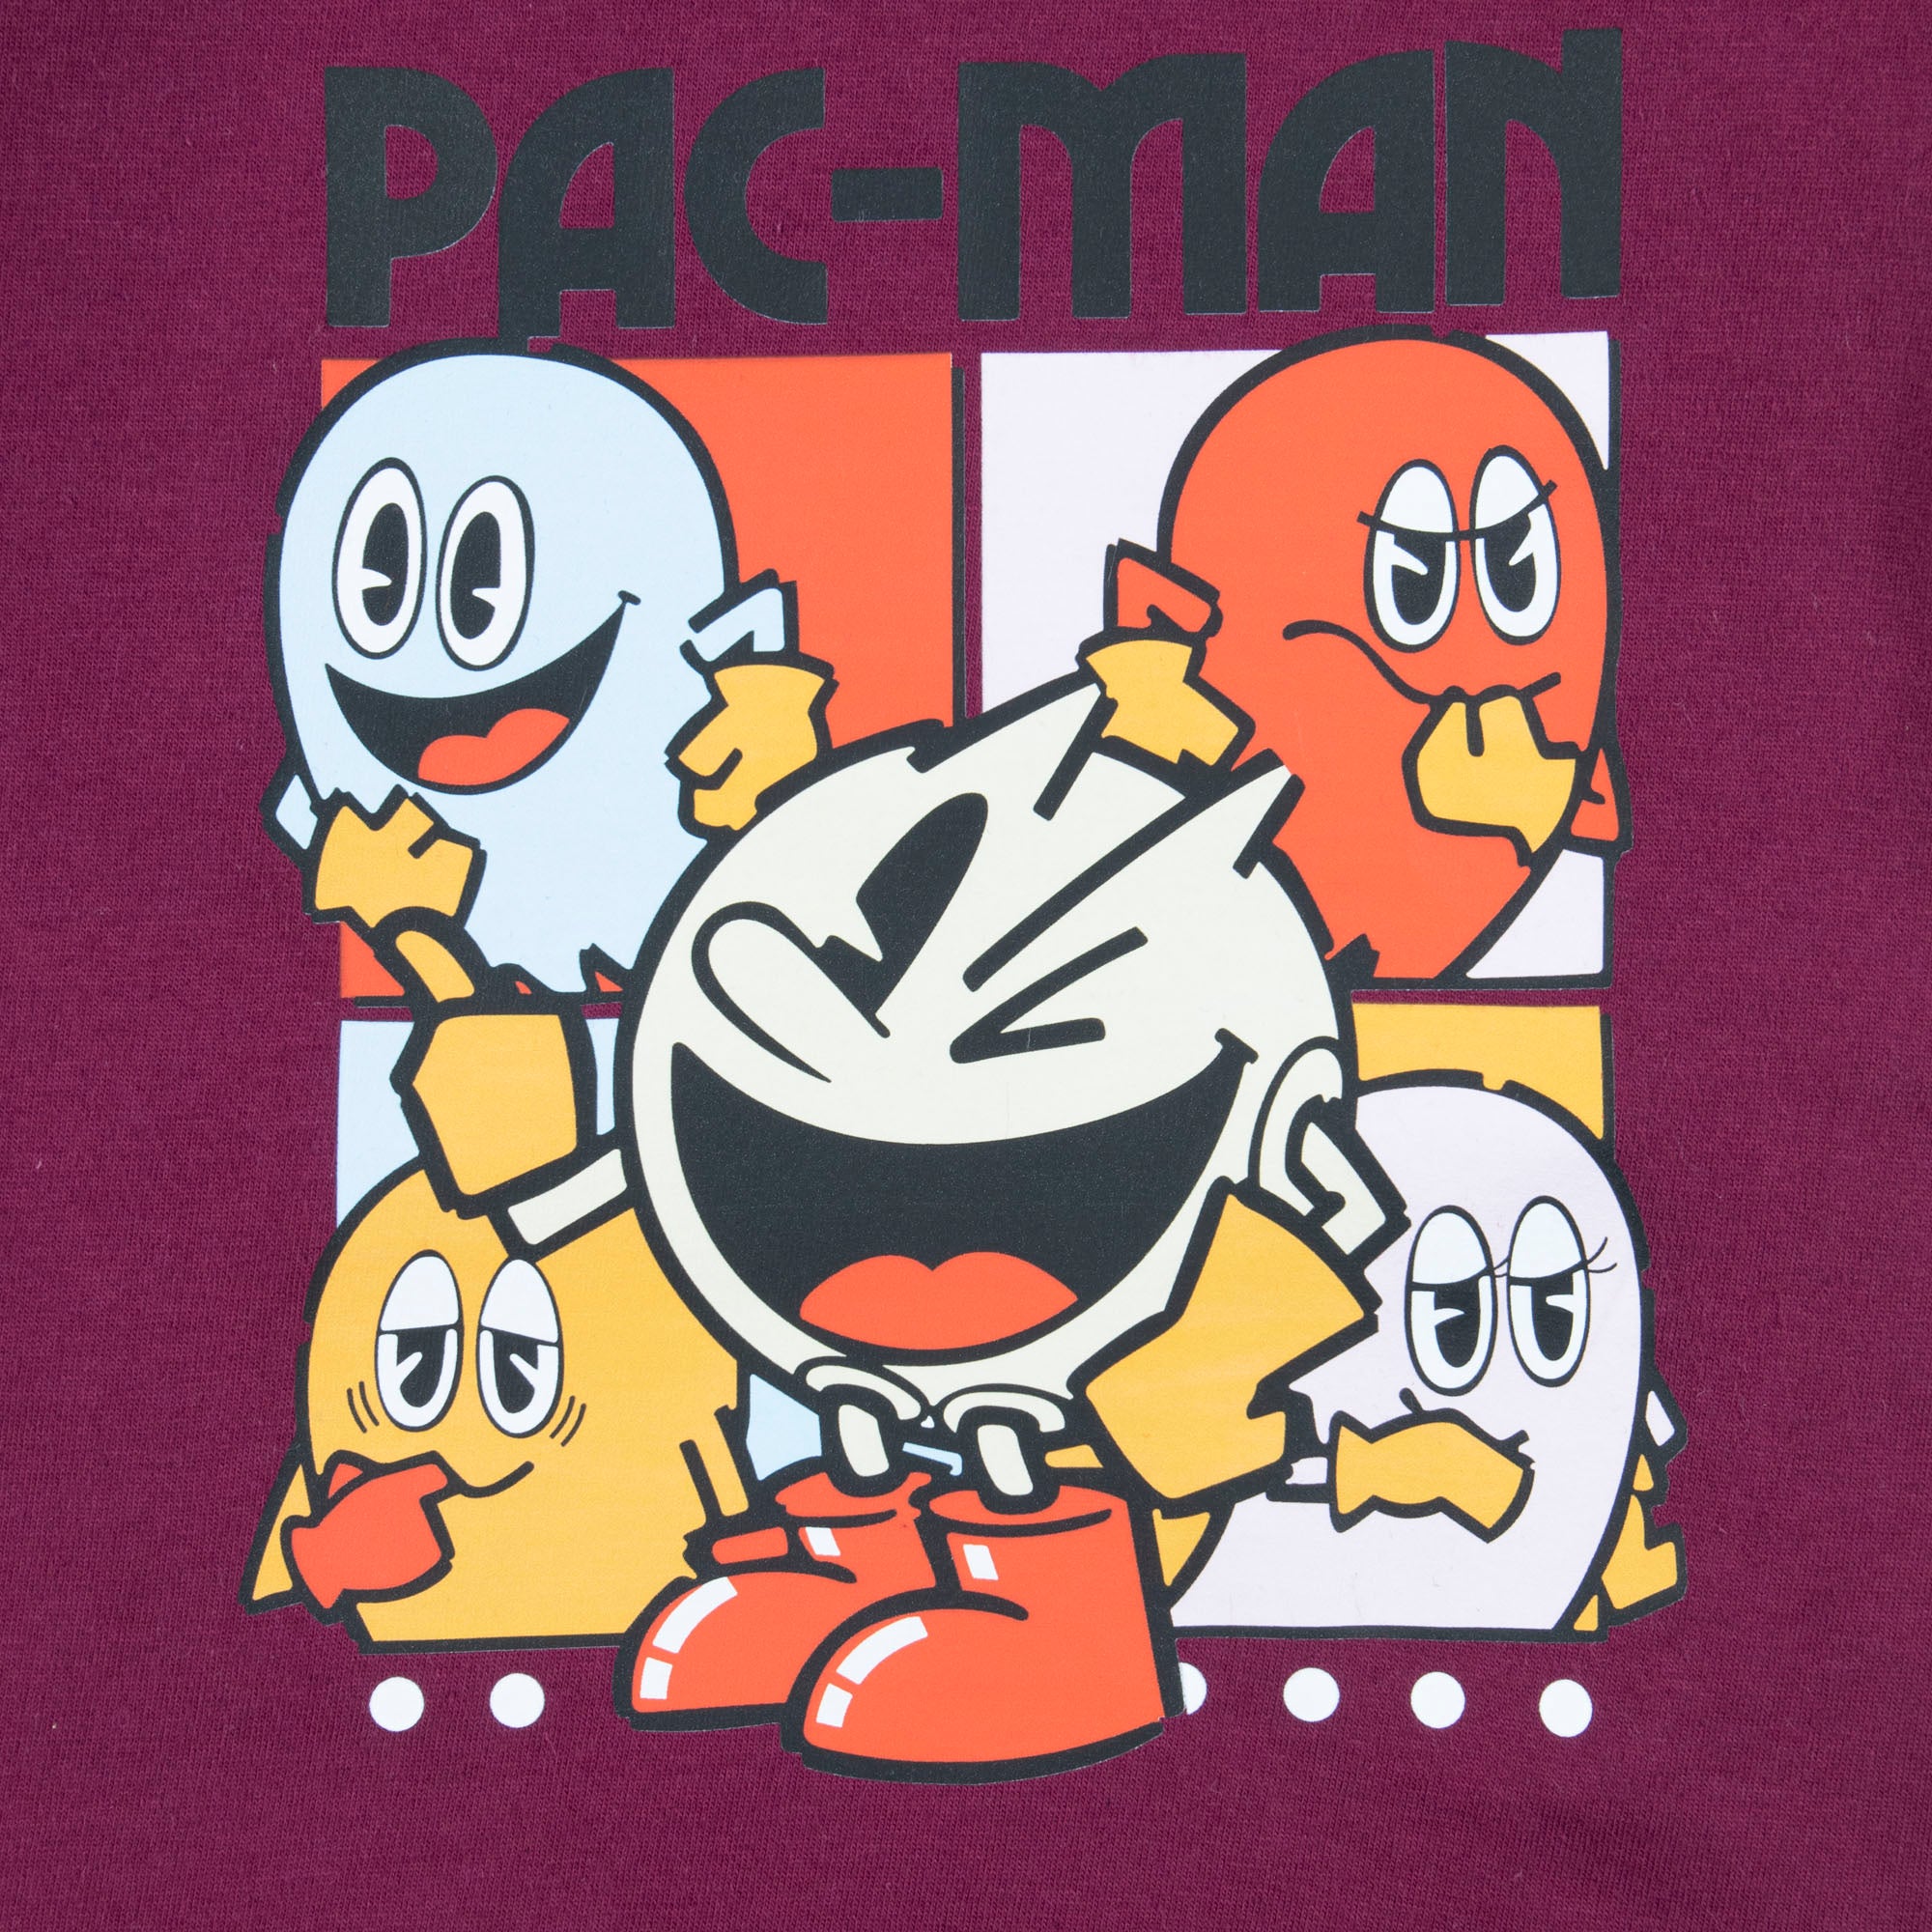 Pac-Man T-shirt